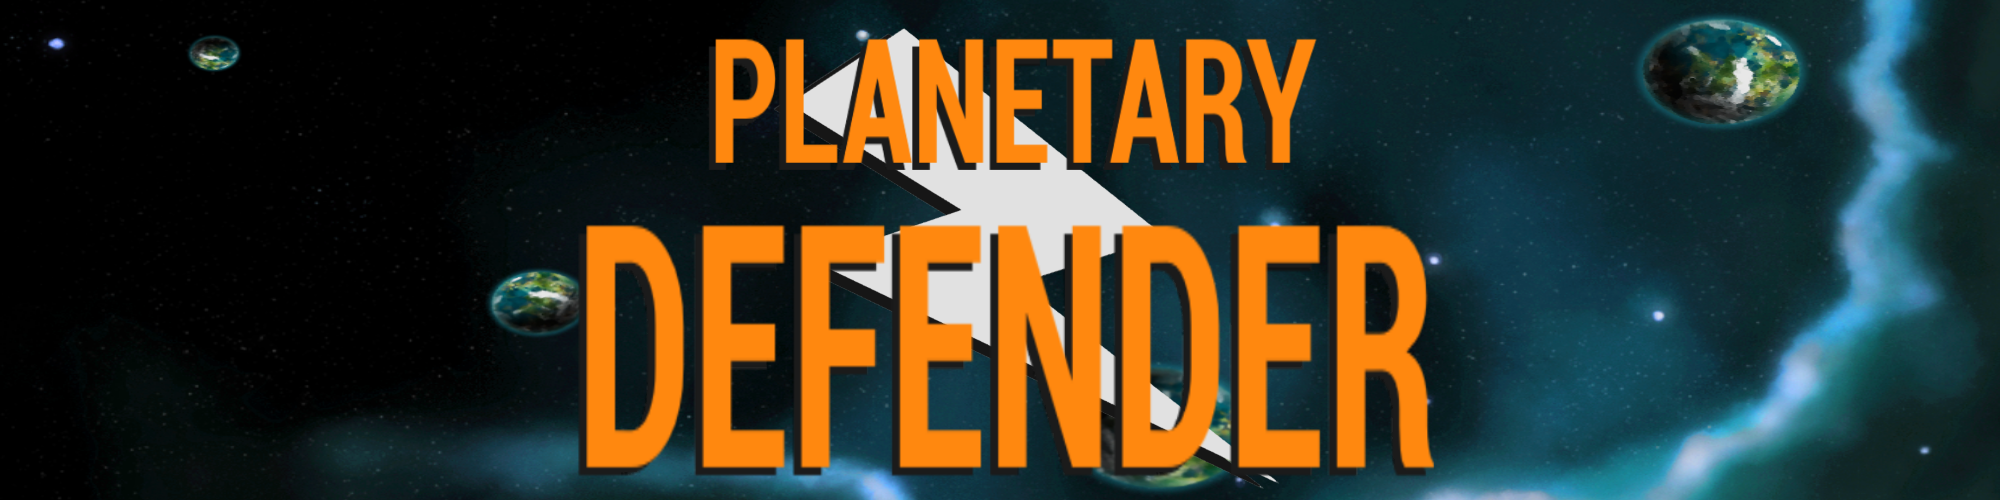 Planetary Defender